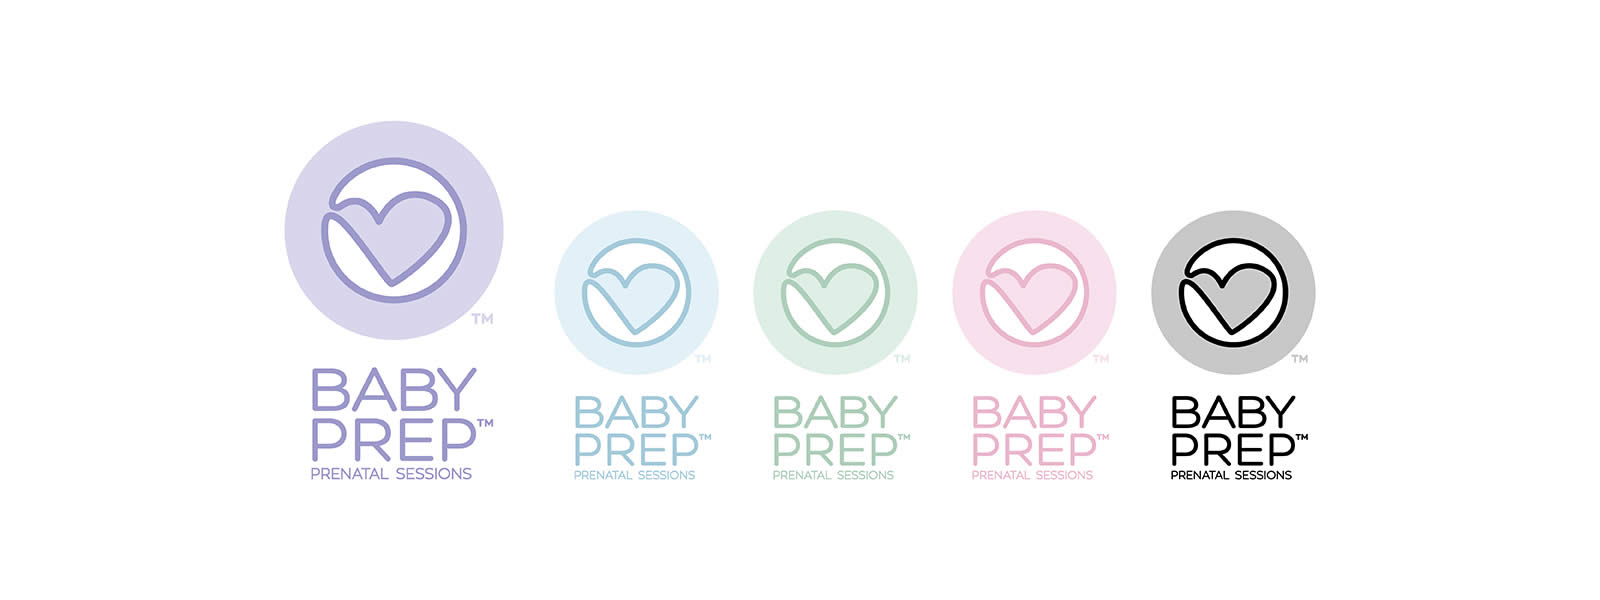 Baby Prep™ Alternate logo.